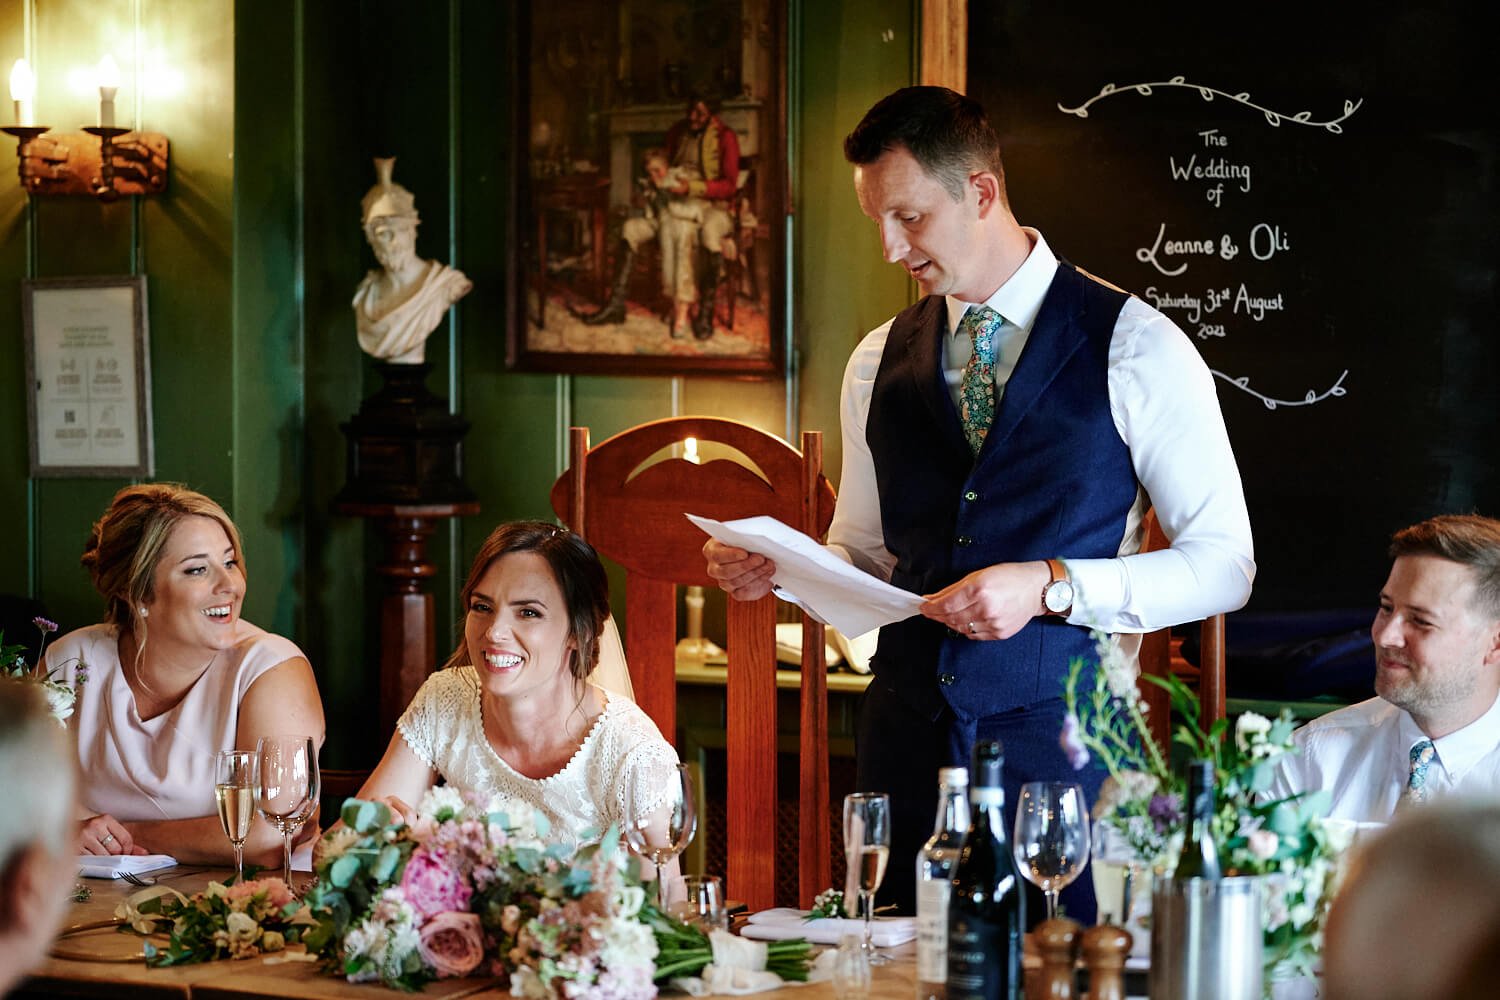 Wedding Photographer, Surrey | Leanne and Oli’s Farnham Wedding 34